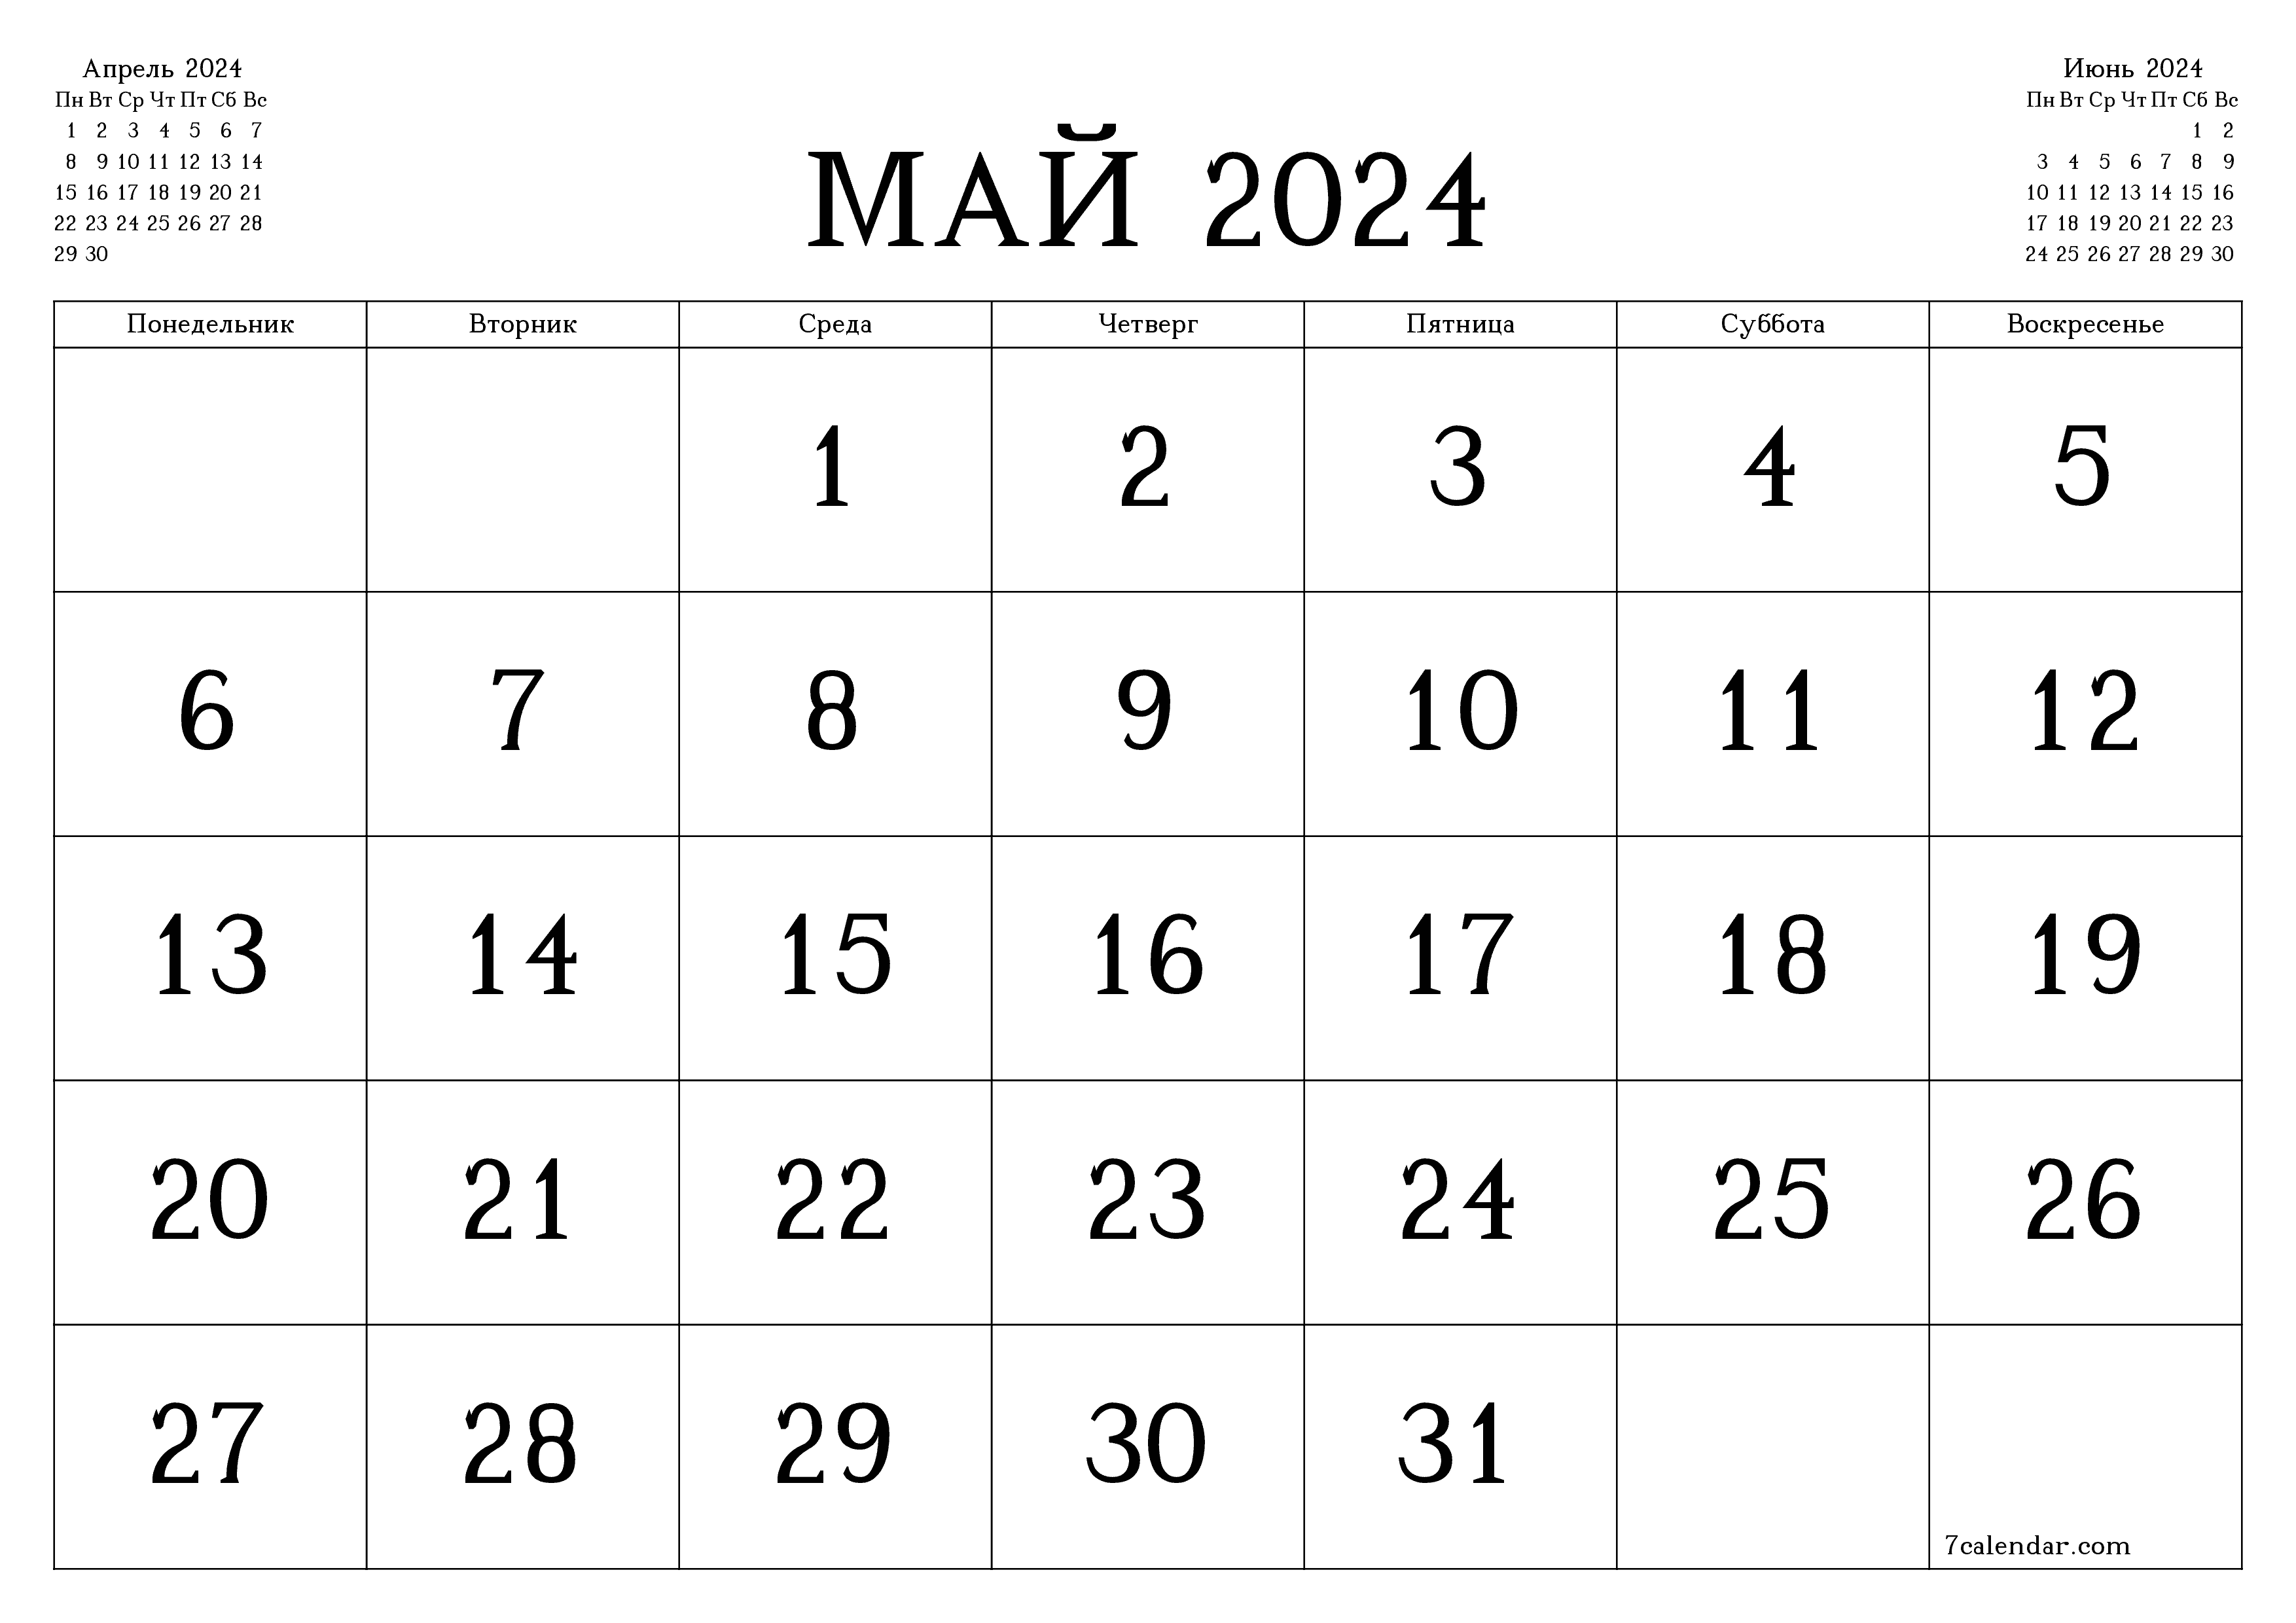 Календари и планеры для печати Май 2024 A4, A3 в PDF и PNG - 7calendar